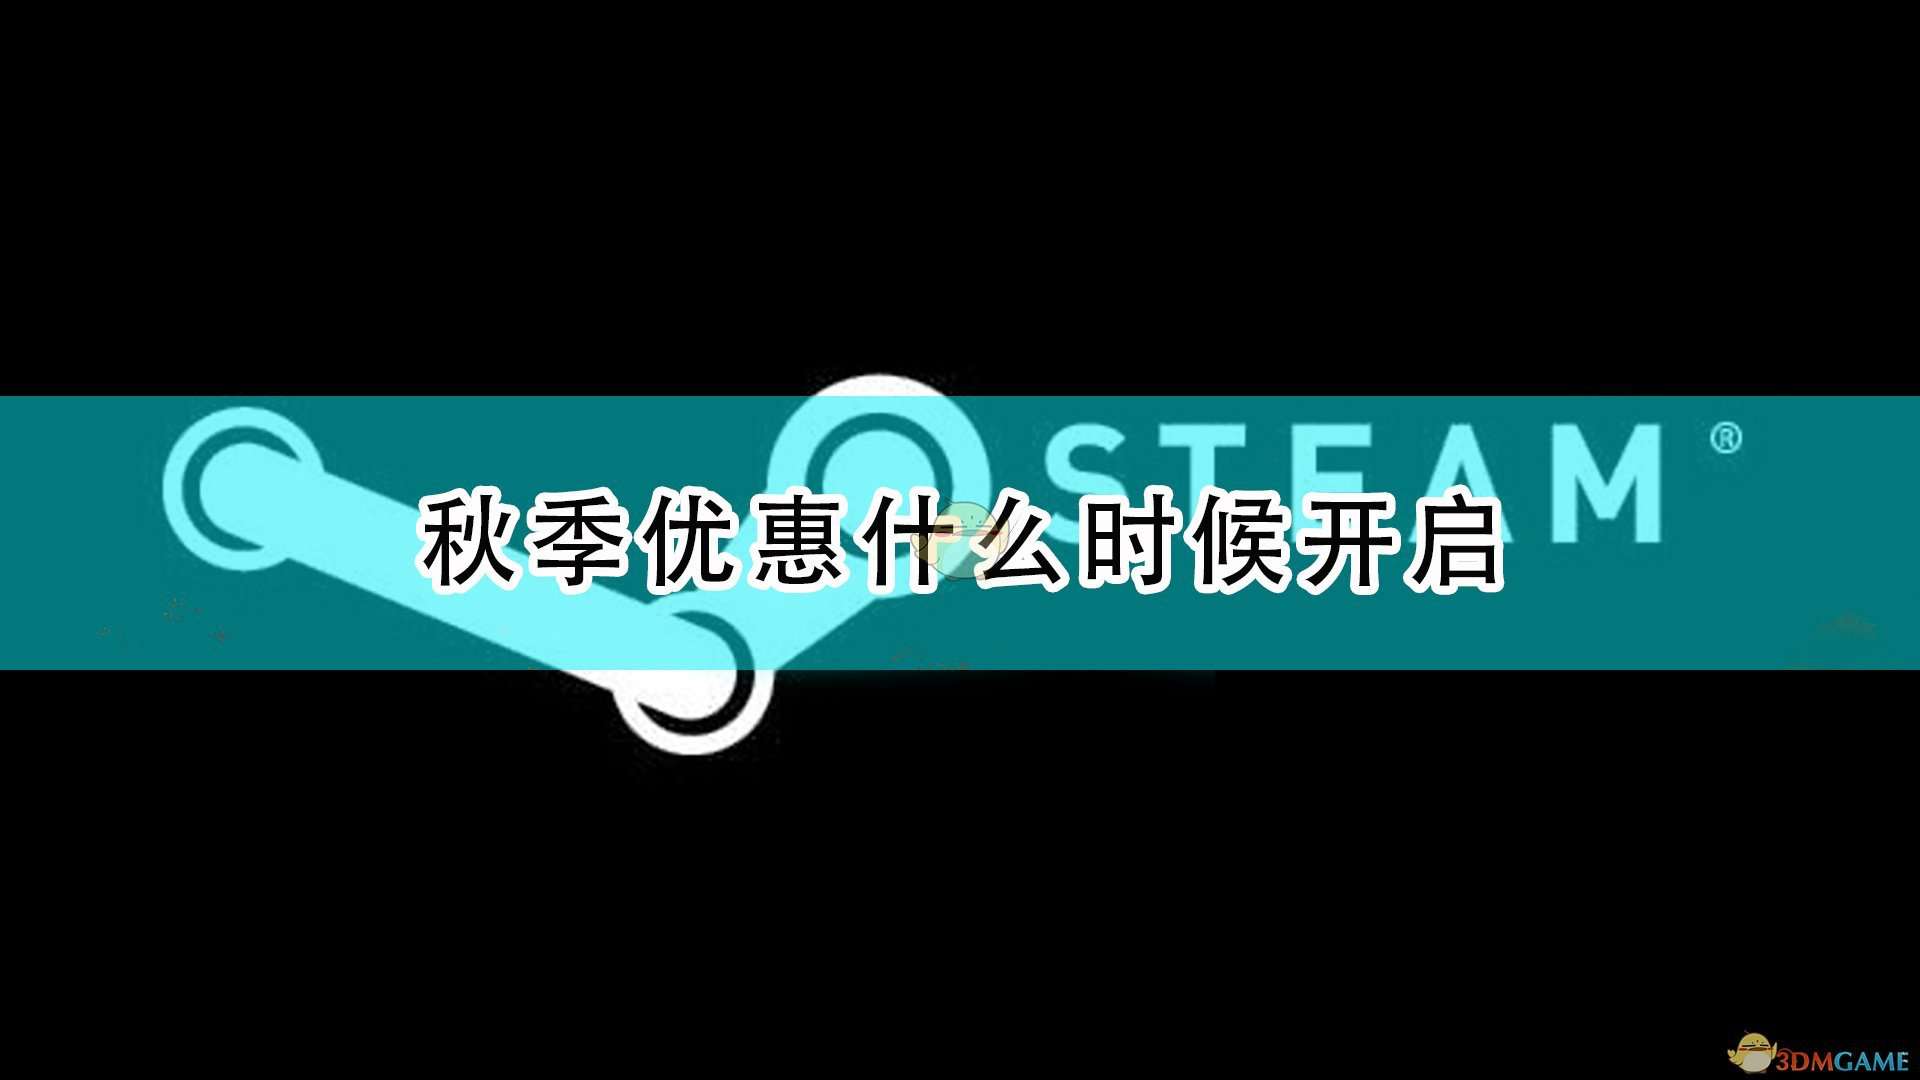 Steam2021秋季特卖时间介绍